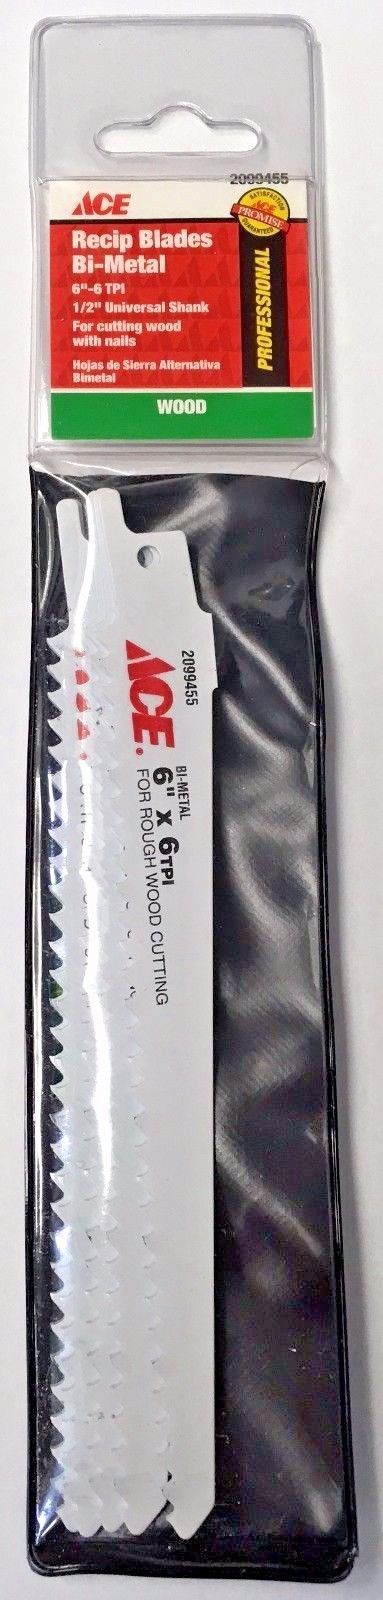 Ace 2099455 6" x 6 TPI Bi-Metal Rough Wood Cutting Reciprocating Blades 5 Pack